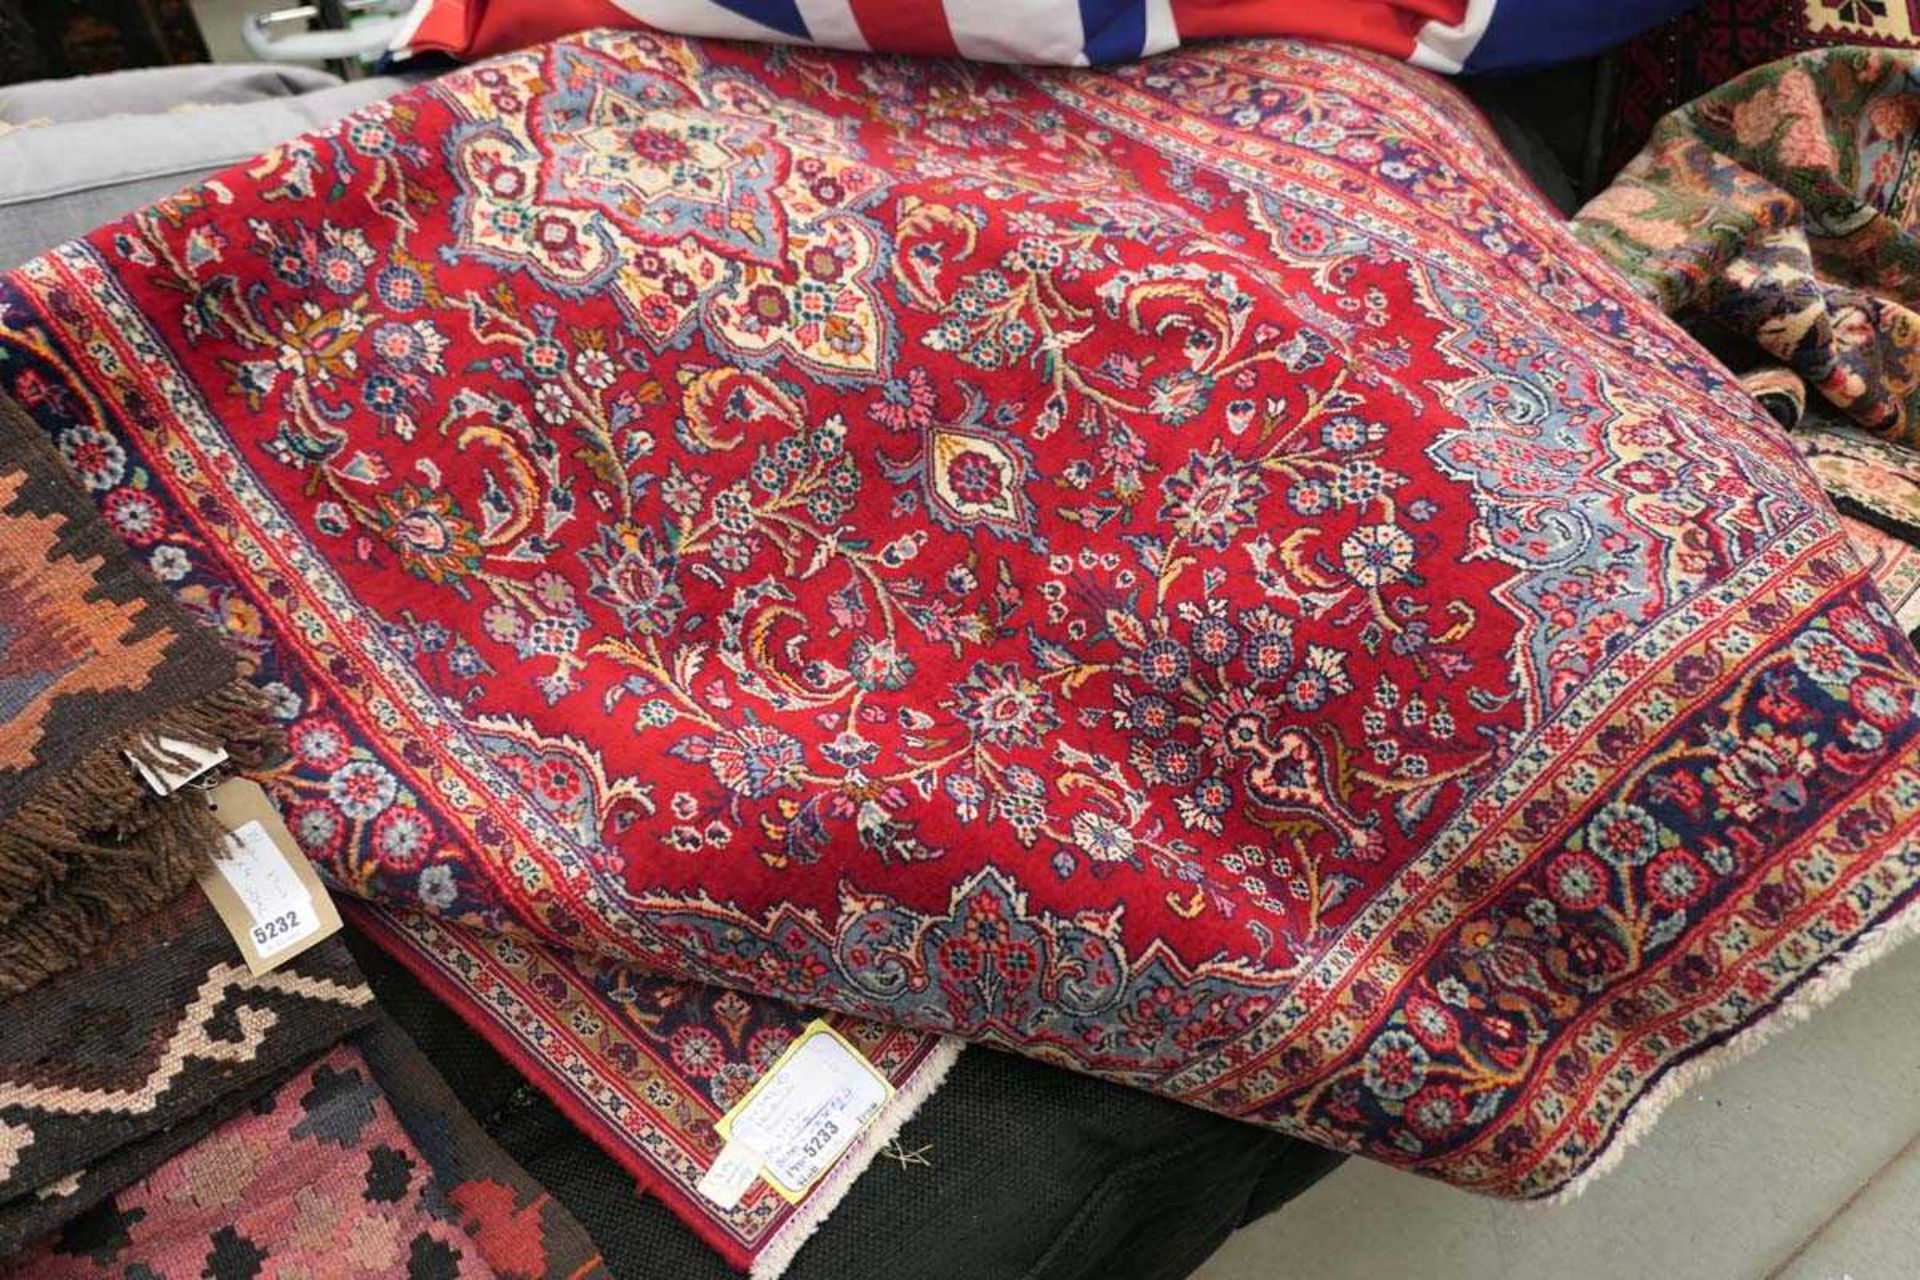 (c) Handmade fine Kashan carpet Approx. dimensions: 207 x 124cm